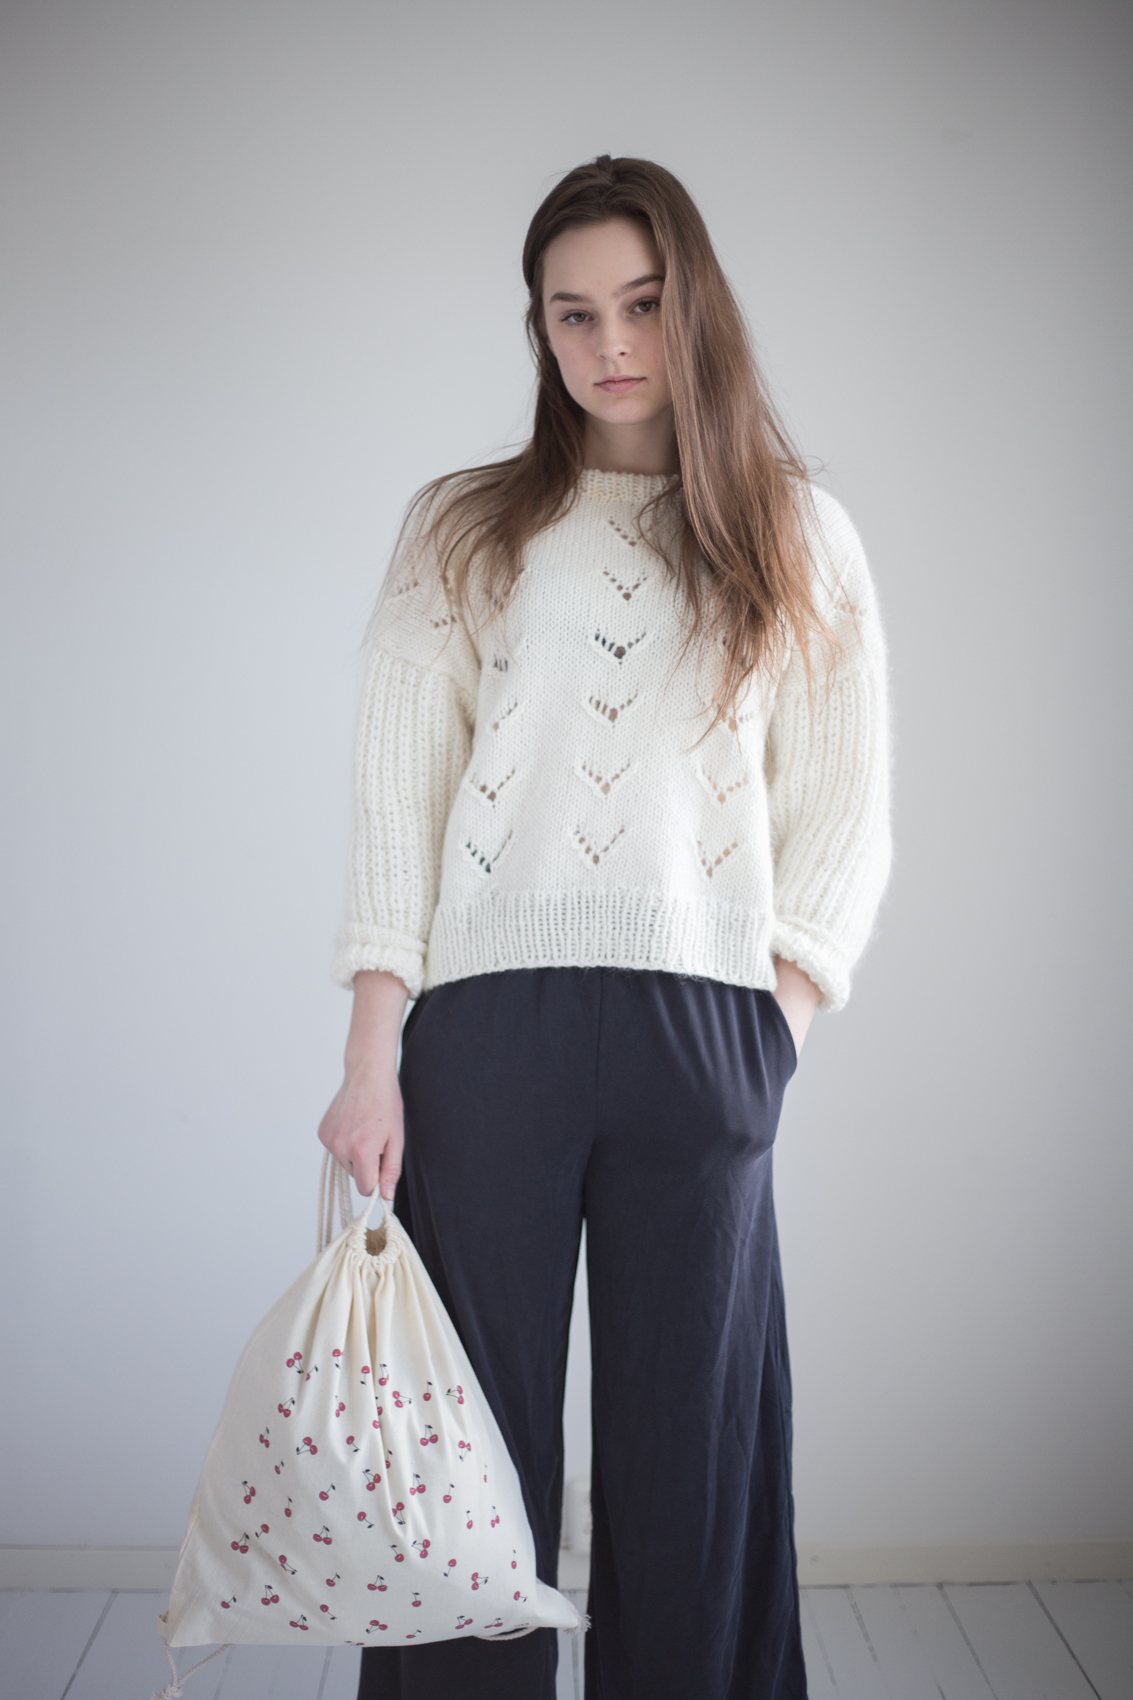 strikkeoppskrift genser dame halvpatent mønster - Bloom Sweater | Eyelet pattern | Womens knitted sweater - by HipKnitShop - 03/04/2018